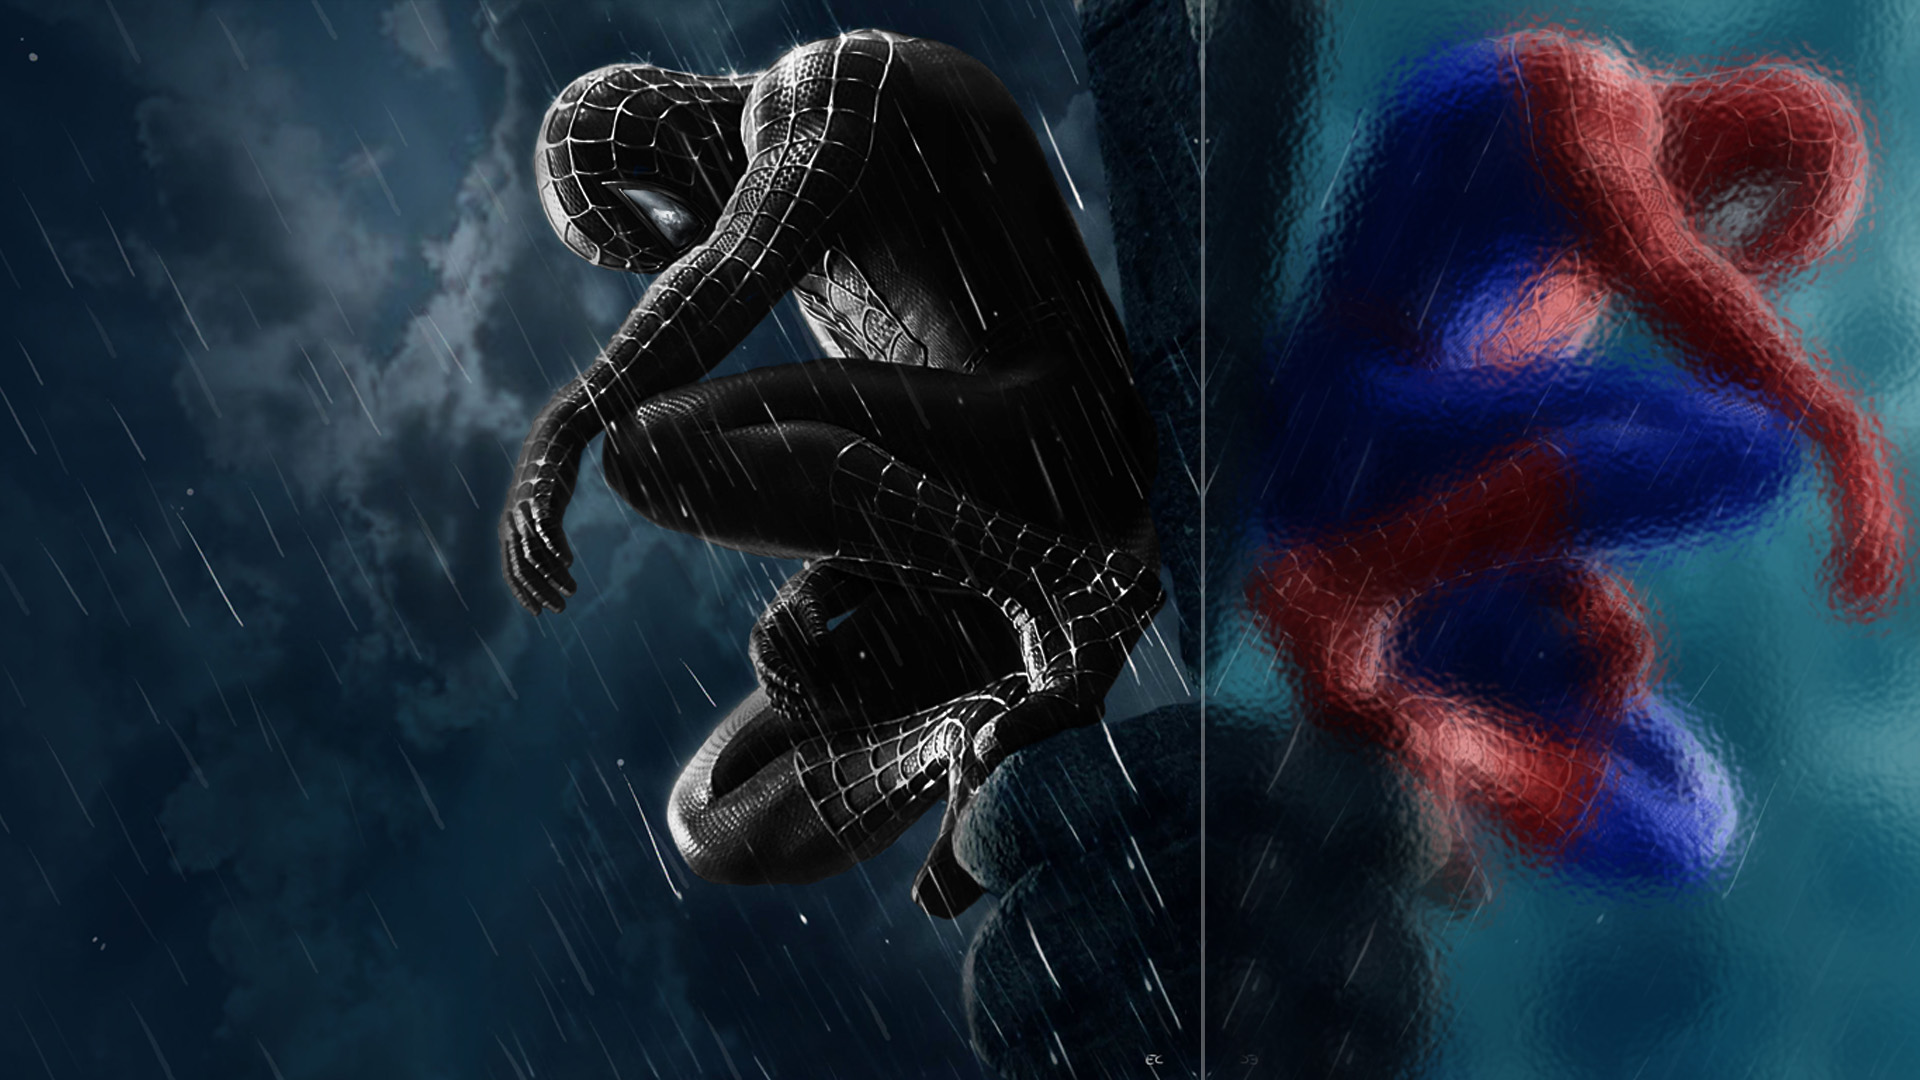 black spiderman wallpaper,cg artwork,fictional character,graphic design,space,digital compositing